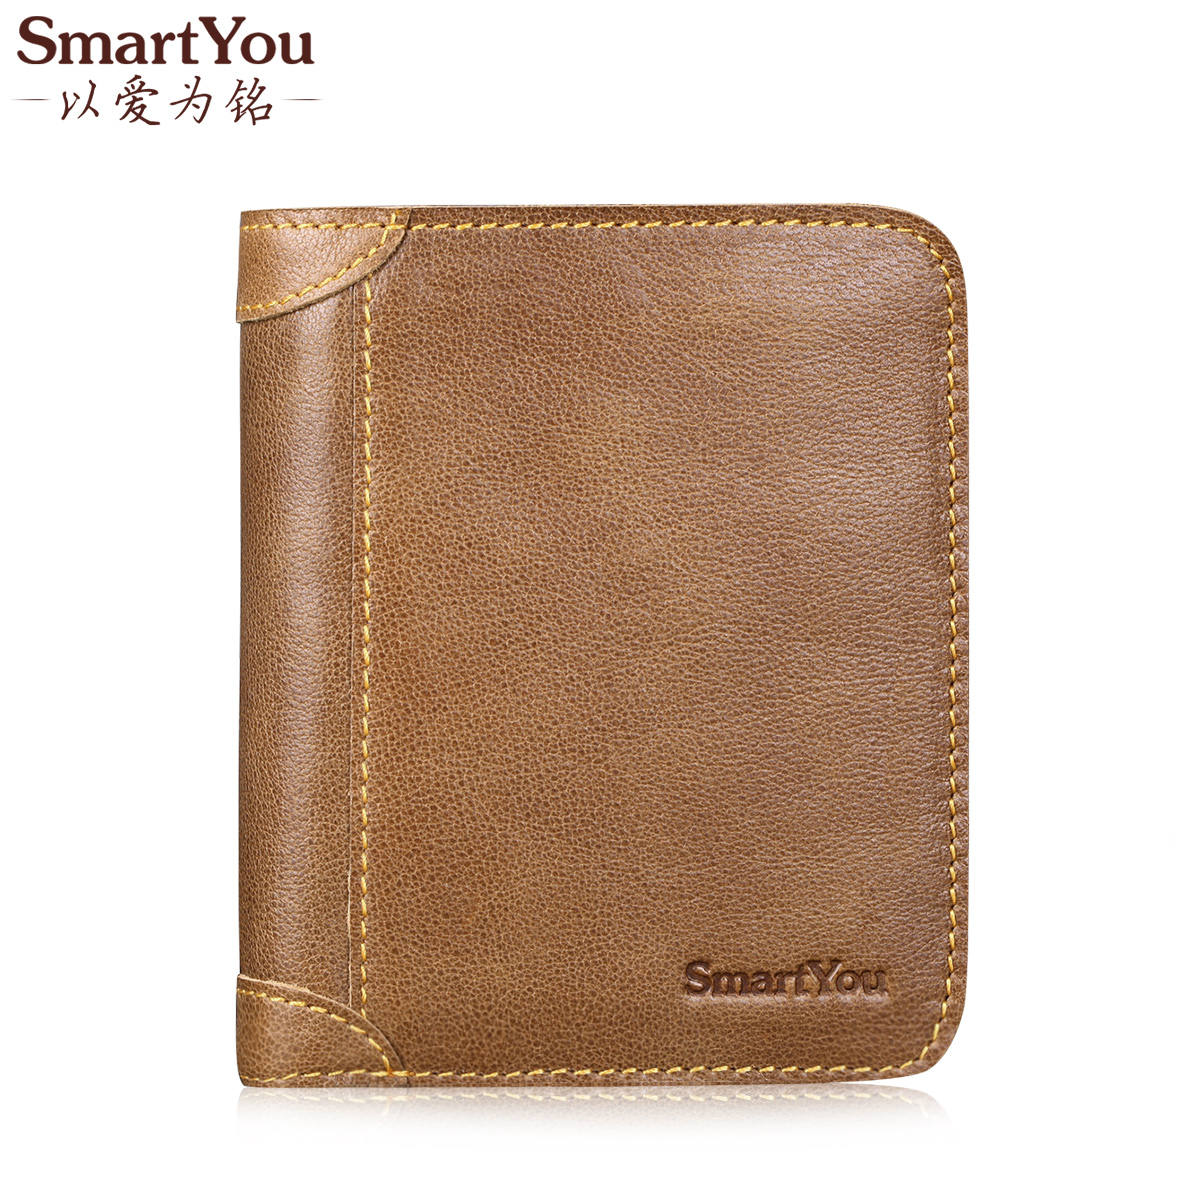 New men's Smartyou male wallet male genuine leather lovers design short design men's cowhide wallet personalized lettering